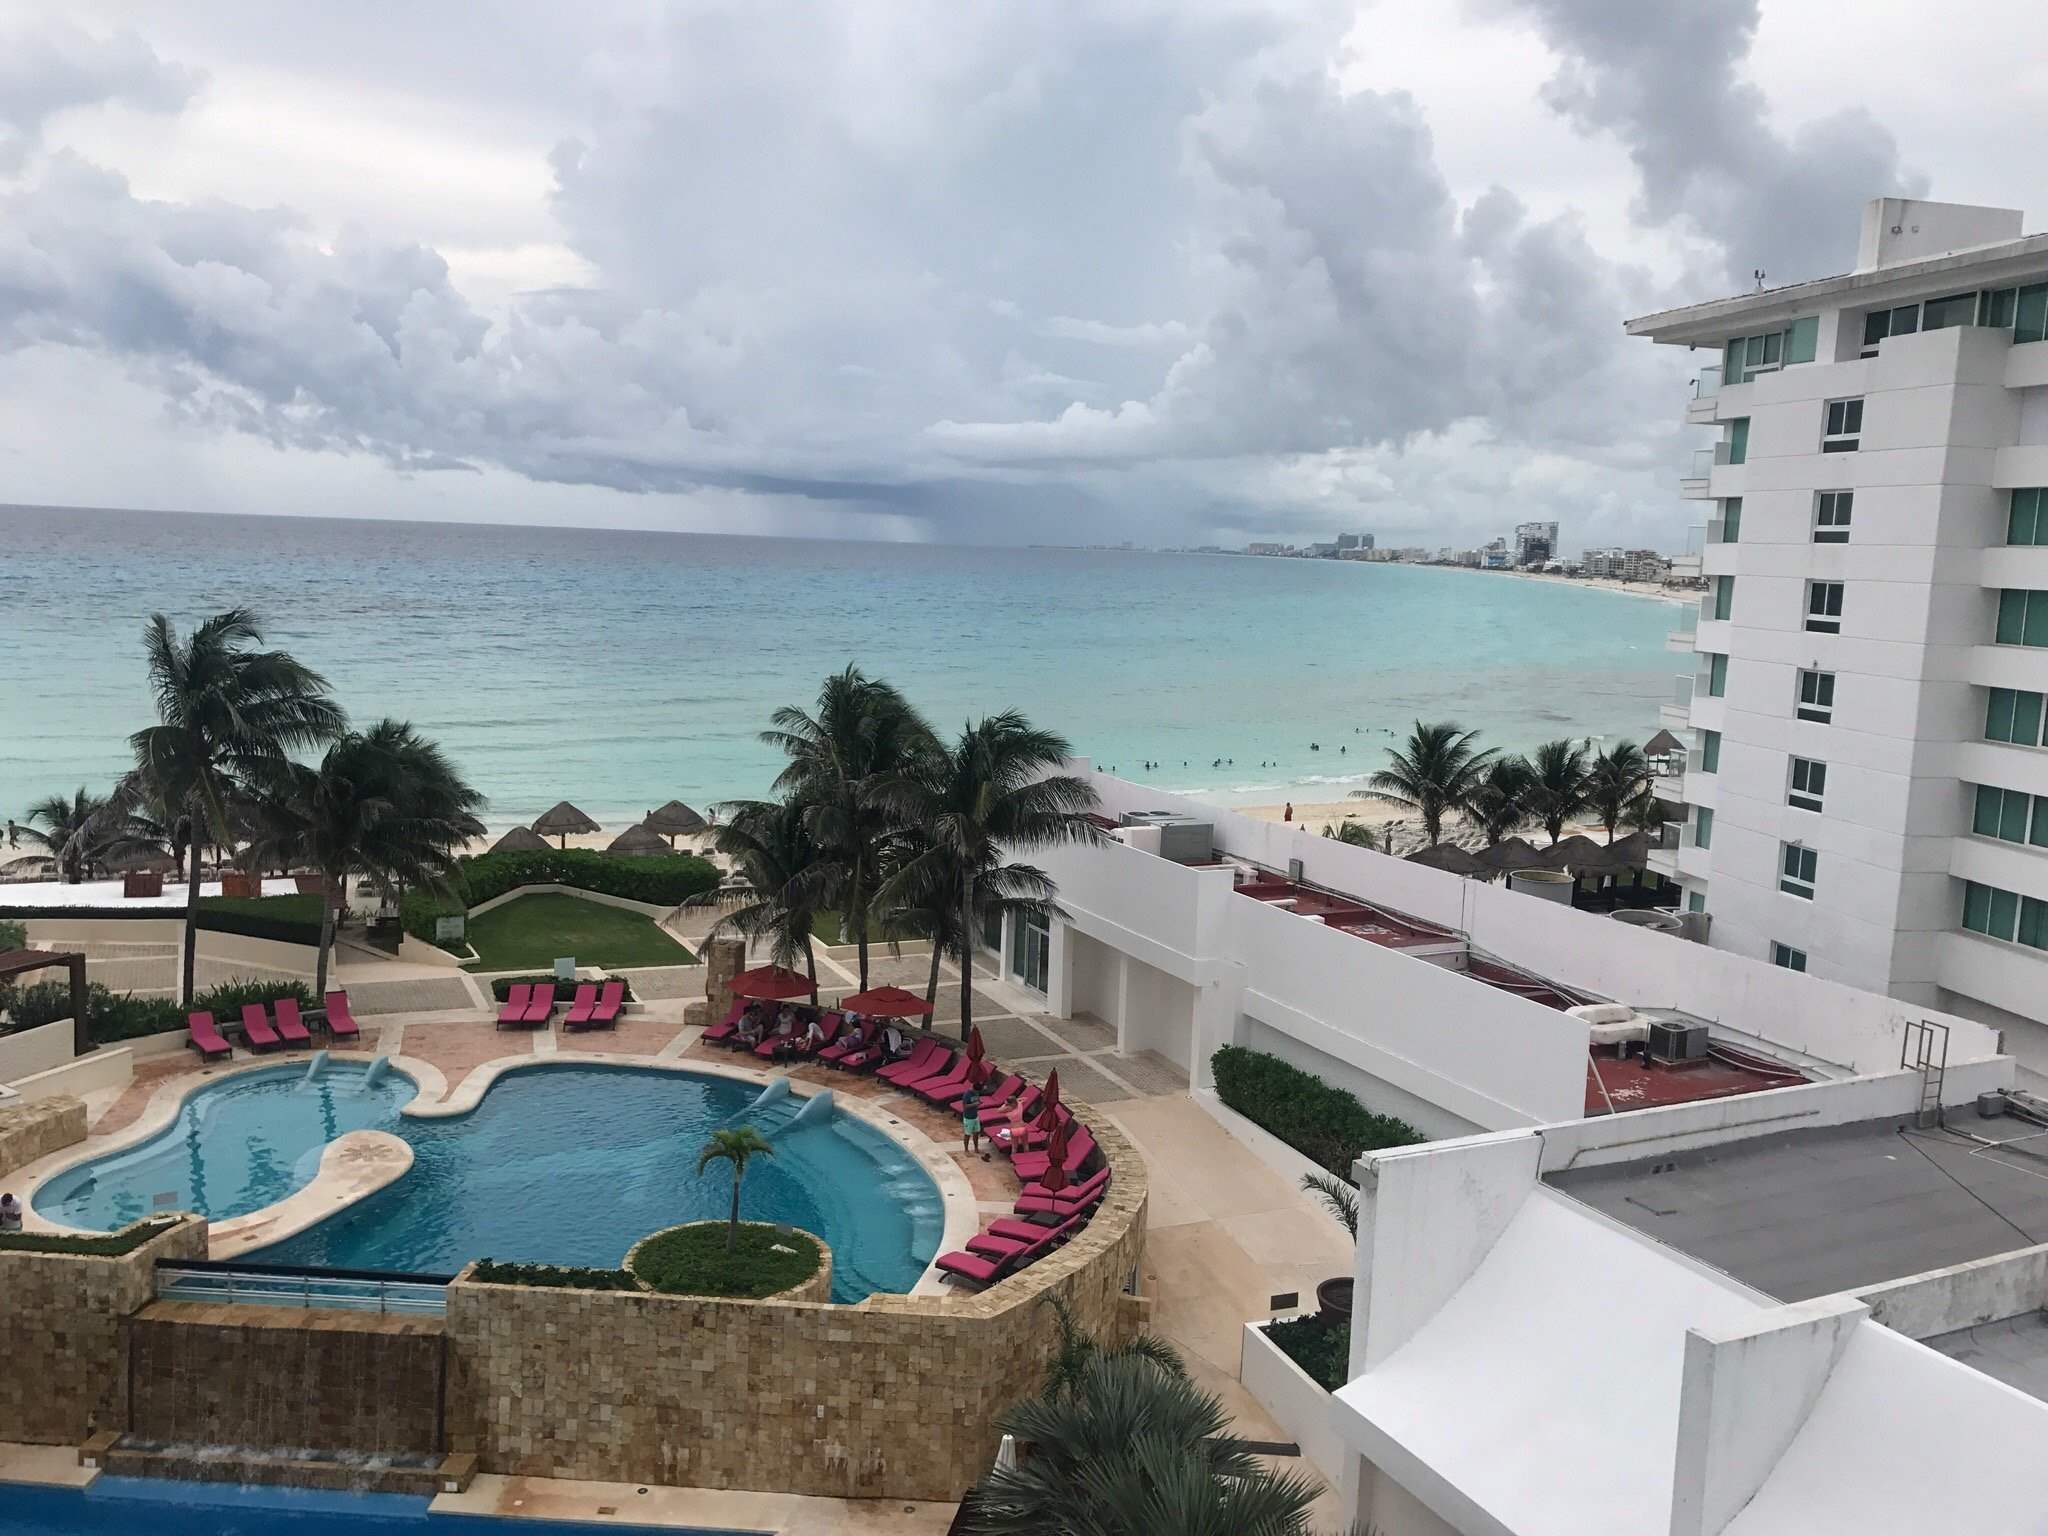 Krystal Grand Punta Cancún , Cancun - Reviews, Photos, Maps, Live webcam